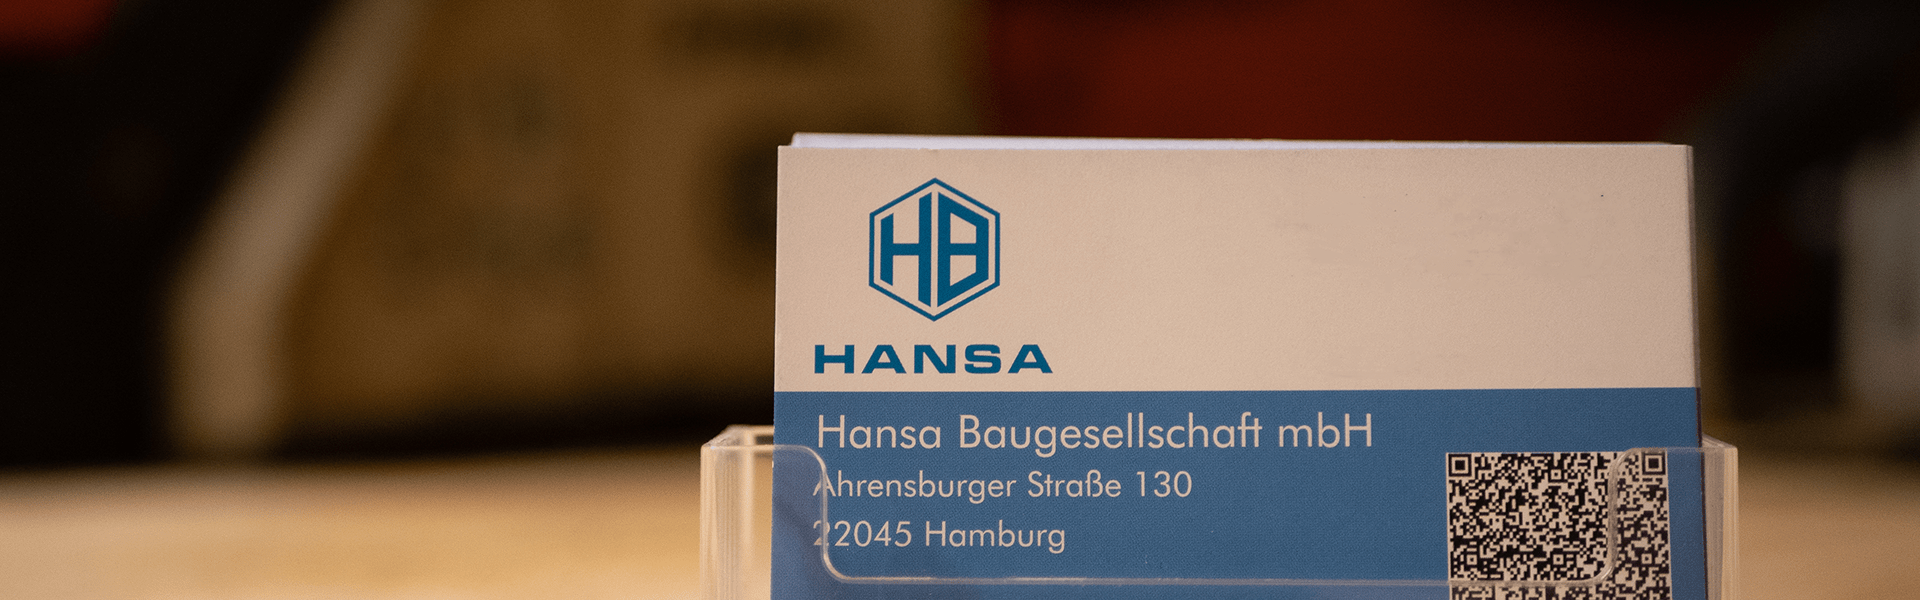 HB Hansa Baugesellschaft mbH Kontakt